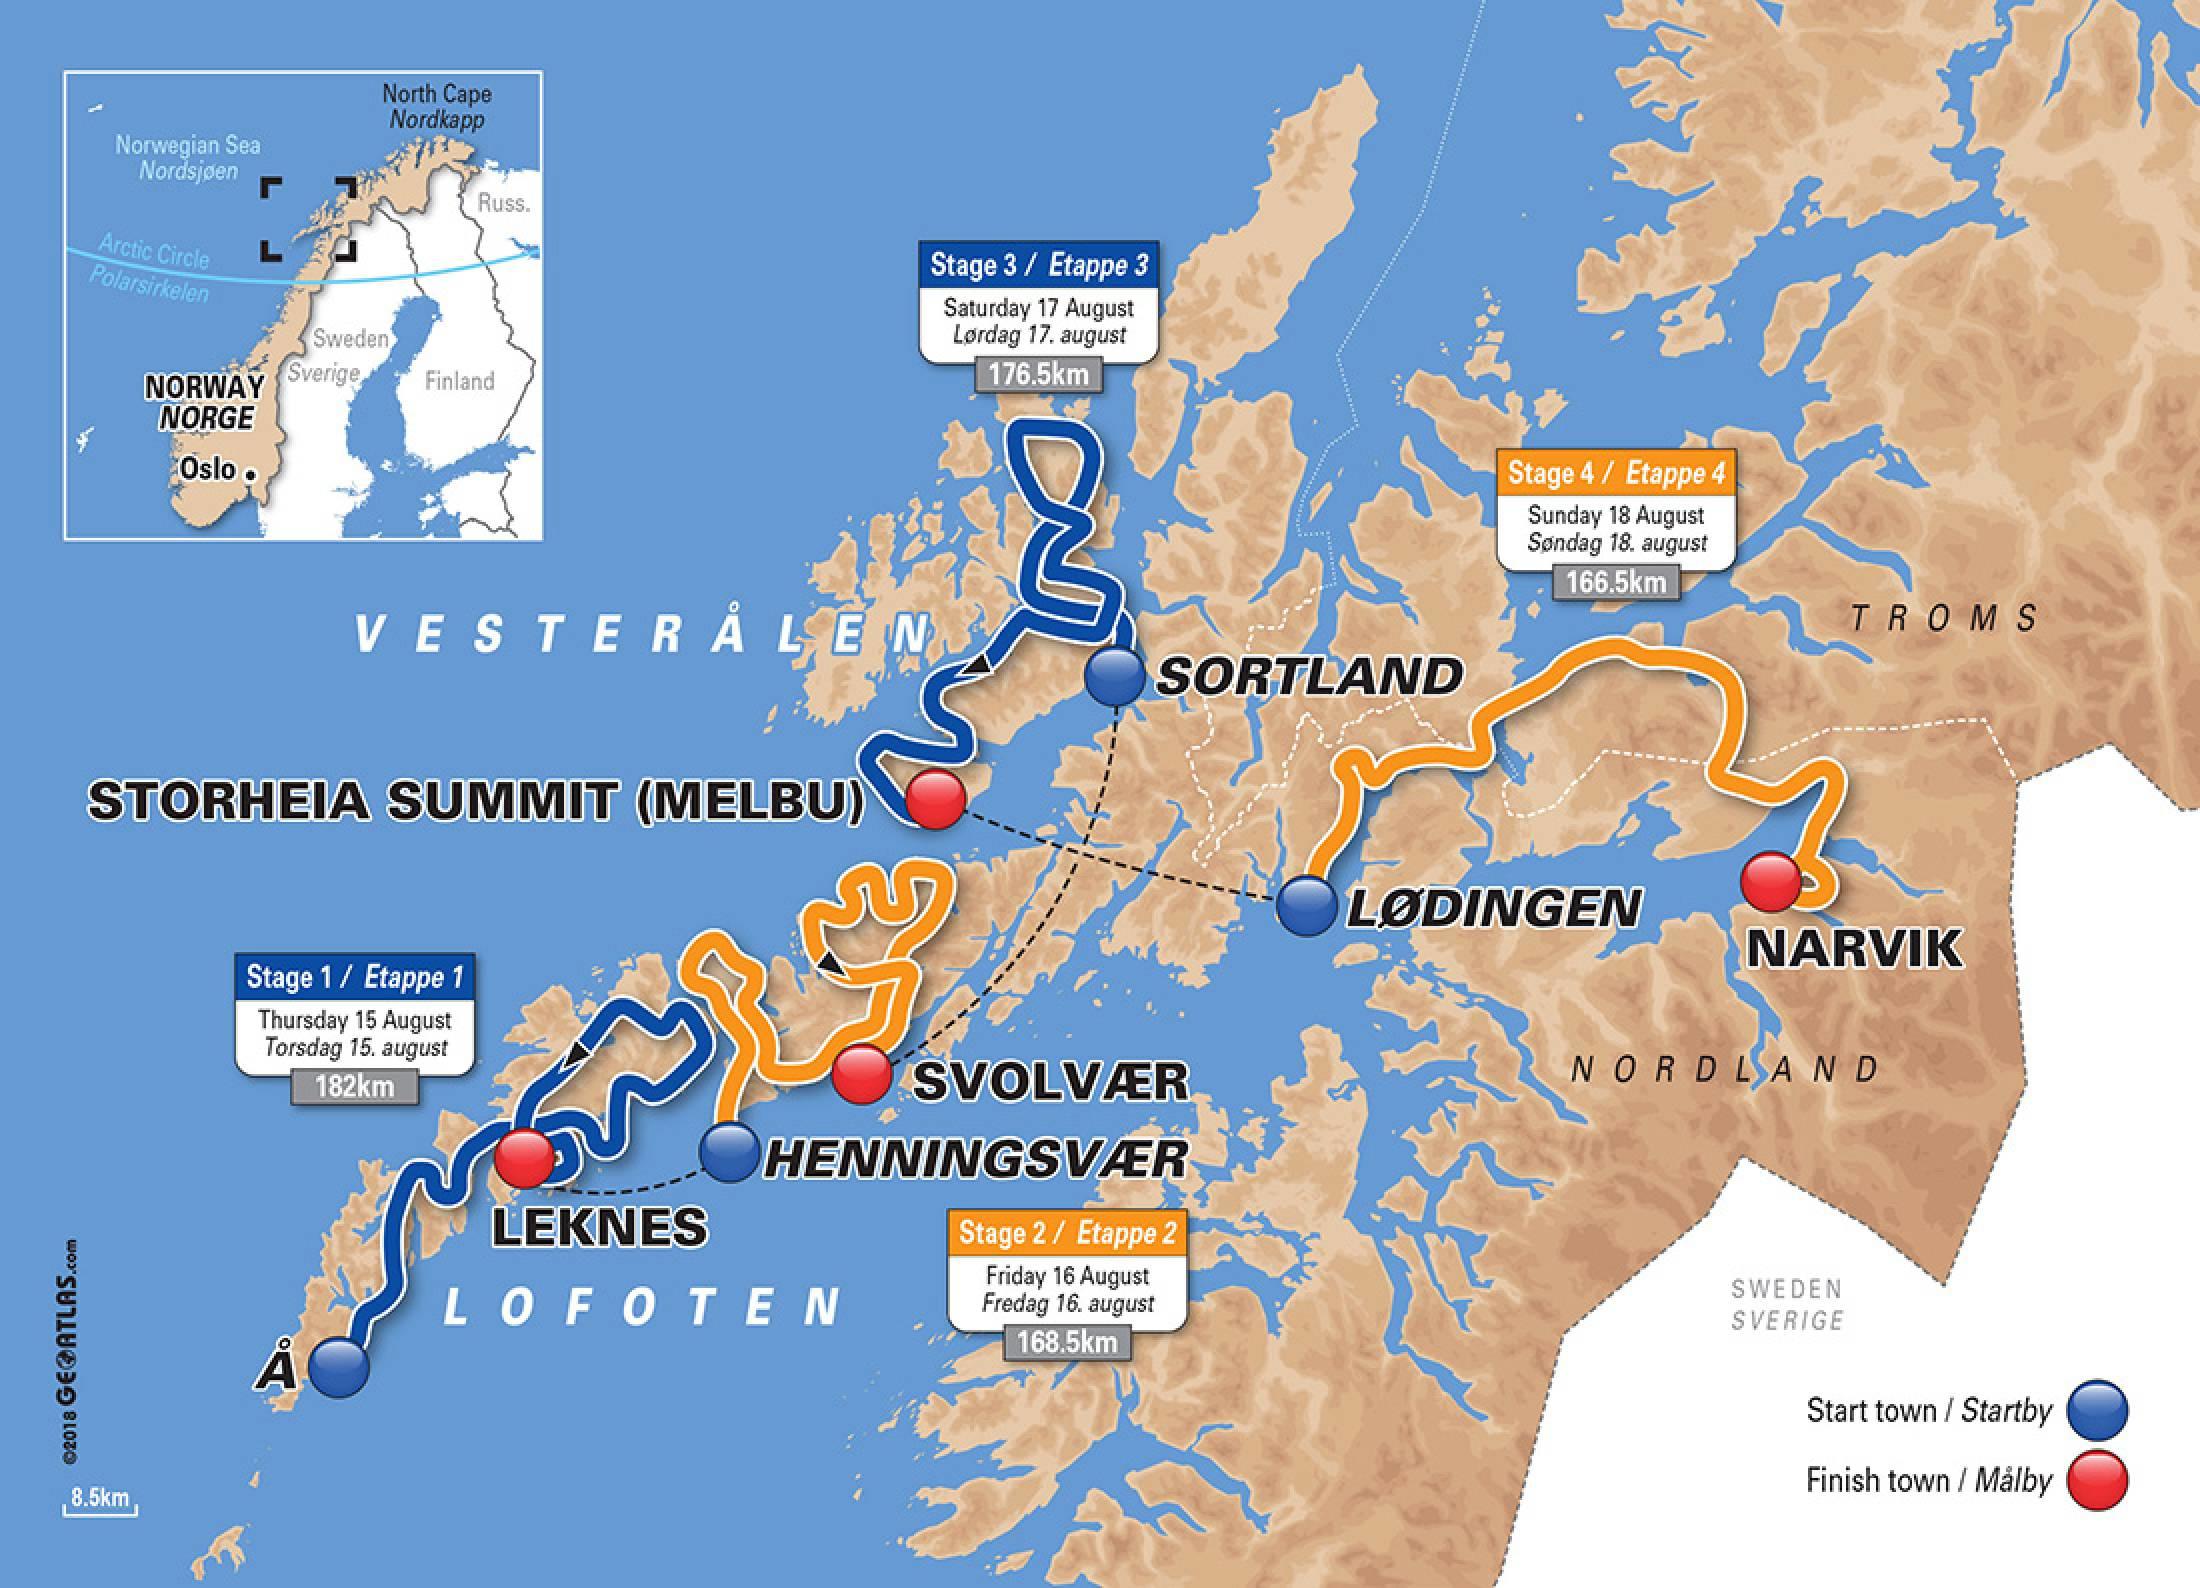 The Arctic Race of Norway